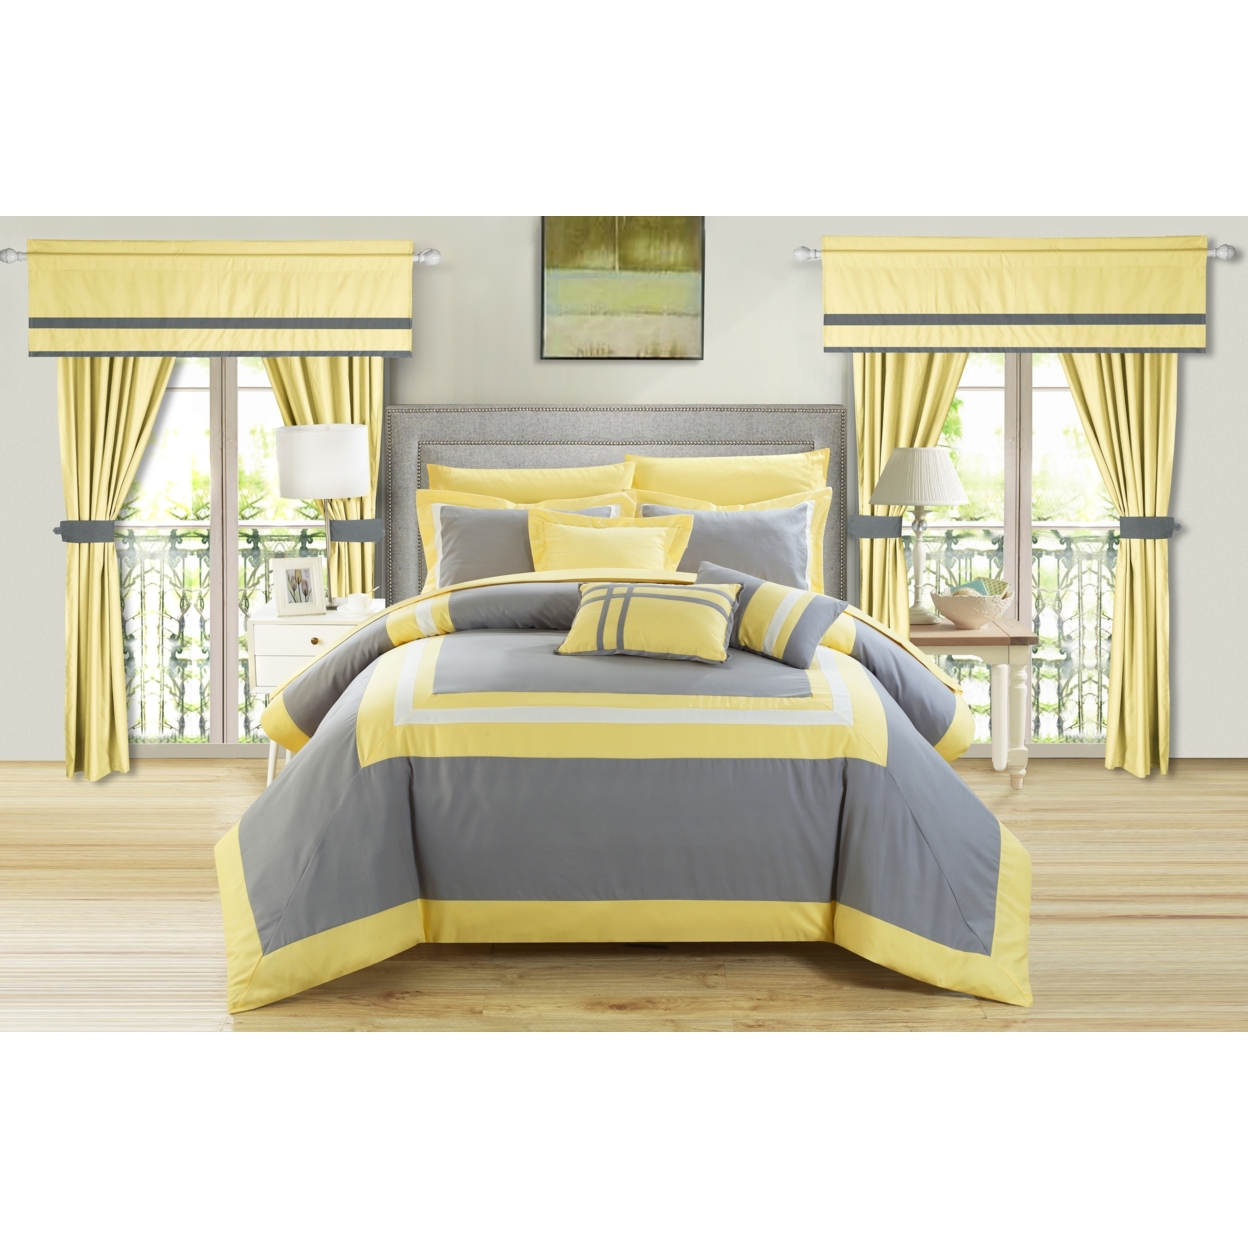 Chic Home 20-Piece Bertran Complete Master Bedroom Set and Comforter Set